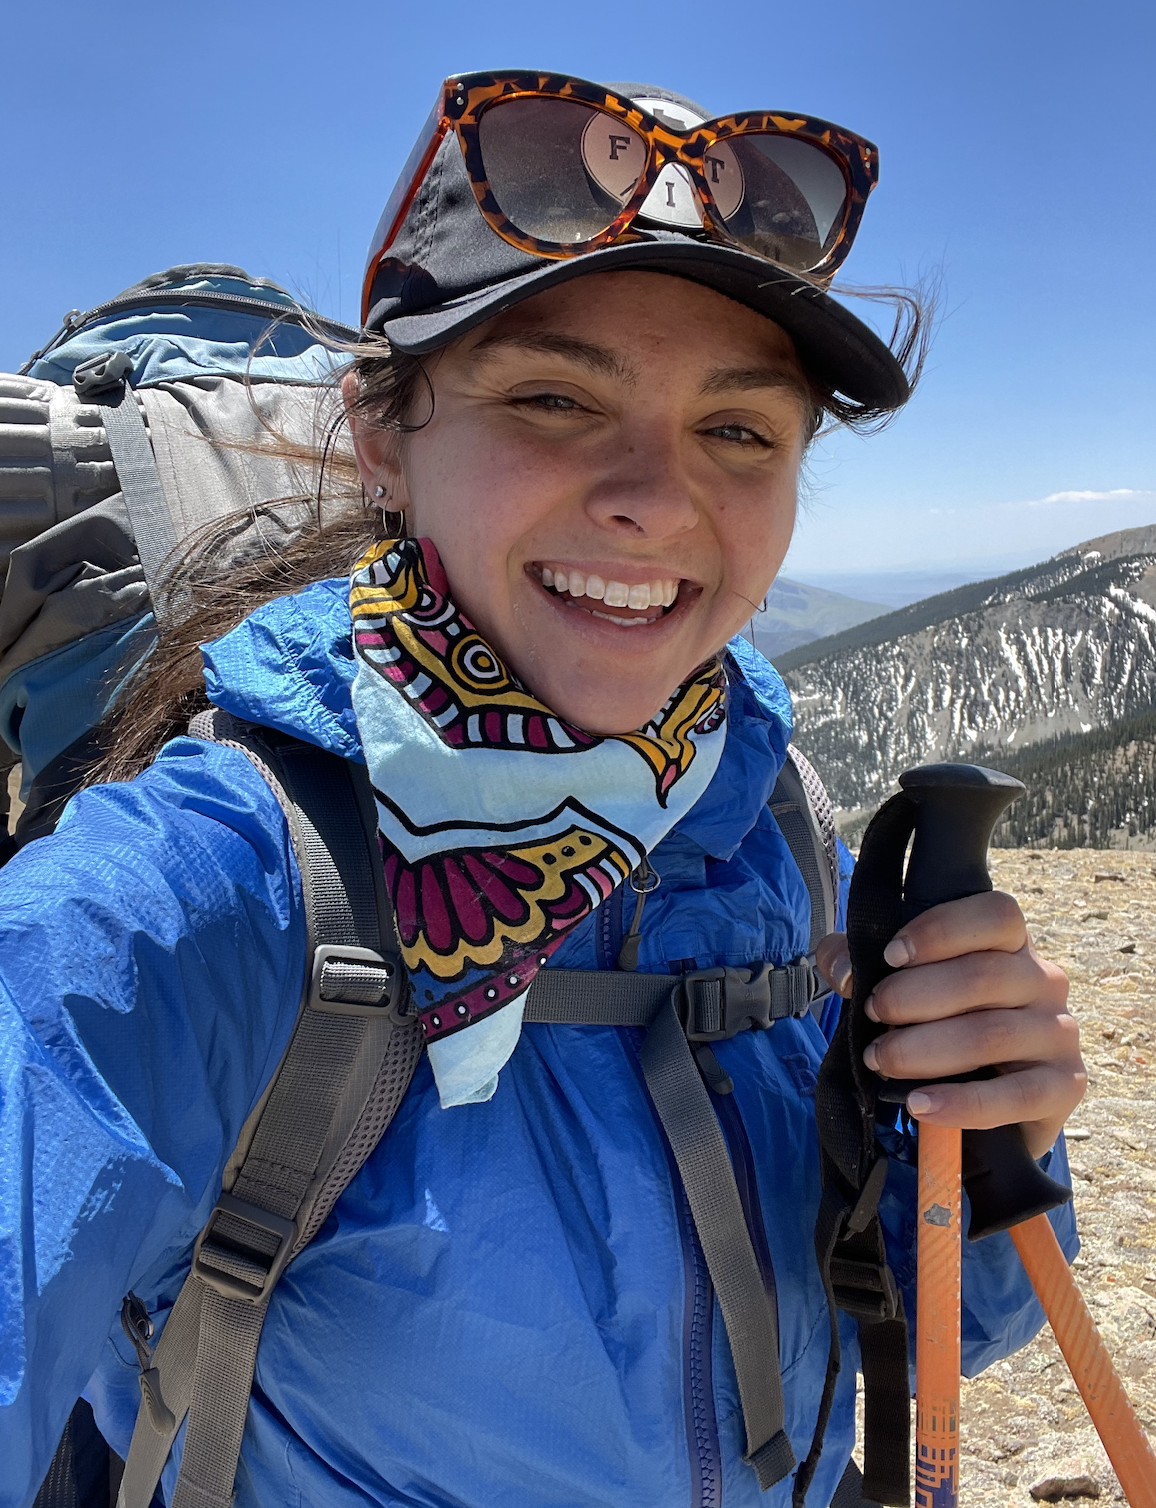 SMU-in-Taos student Carlie Lara hikes through the New Mexico mountains